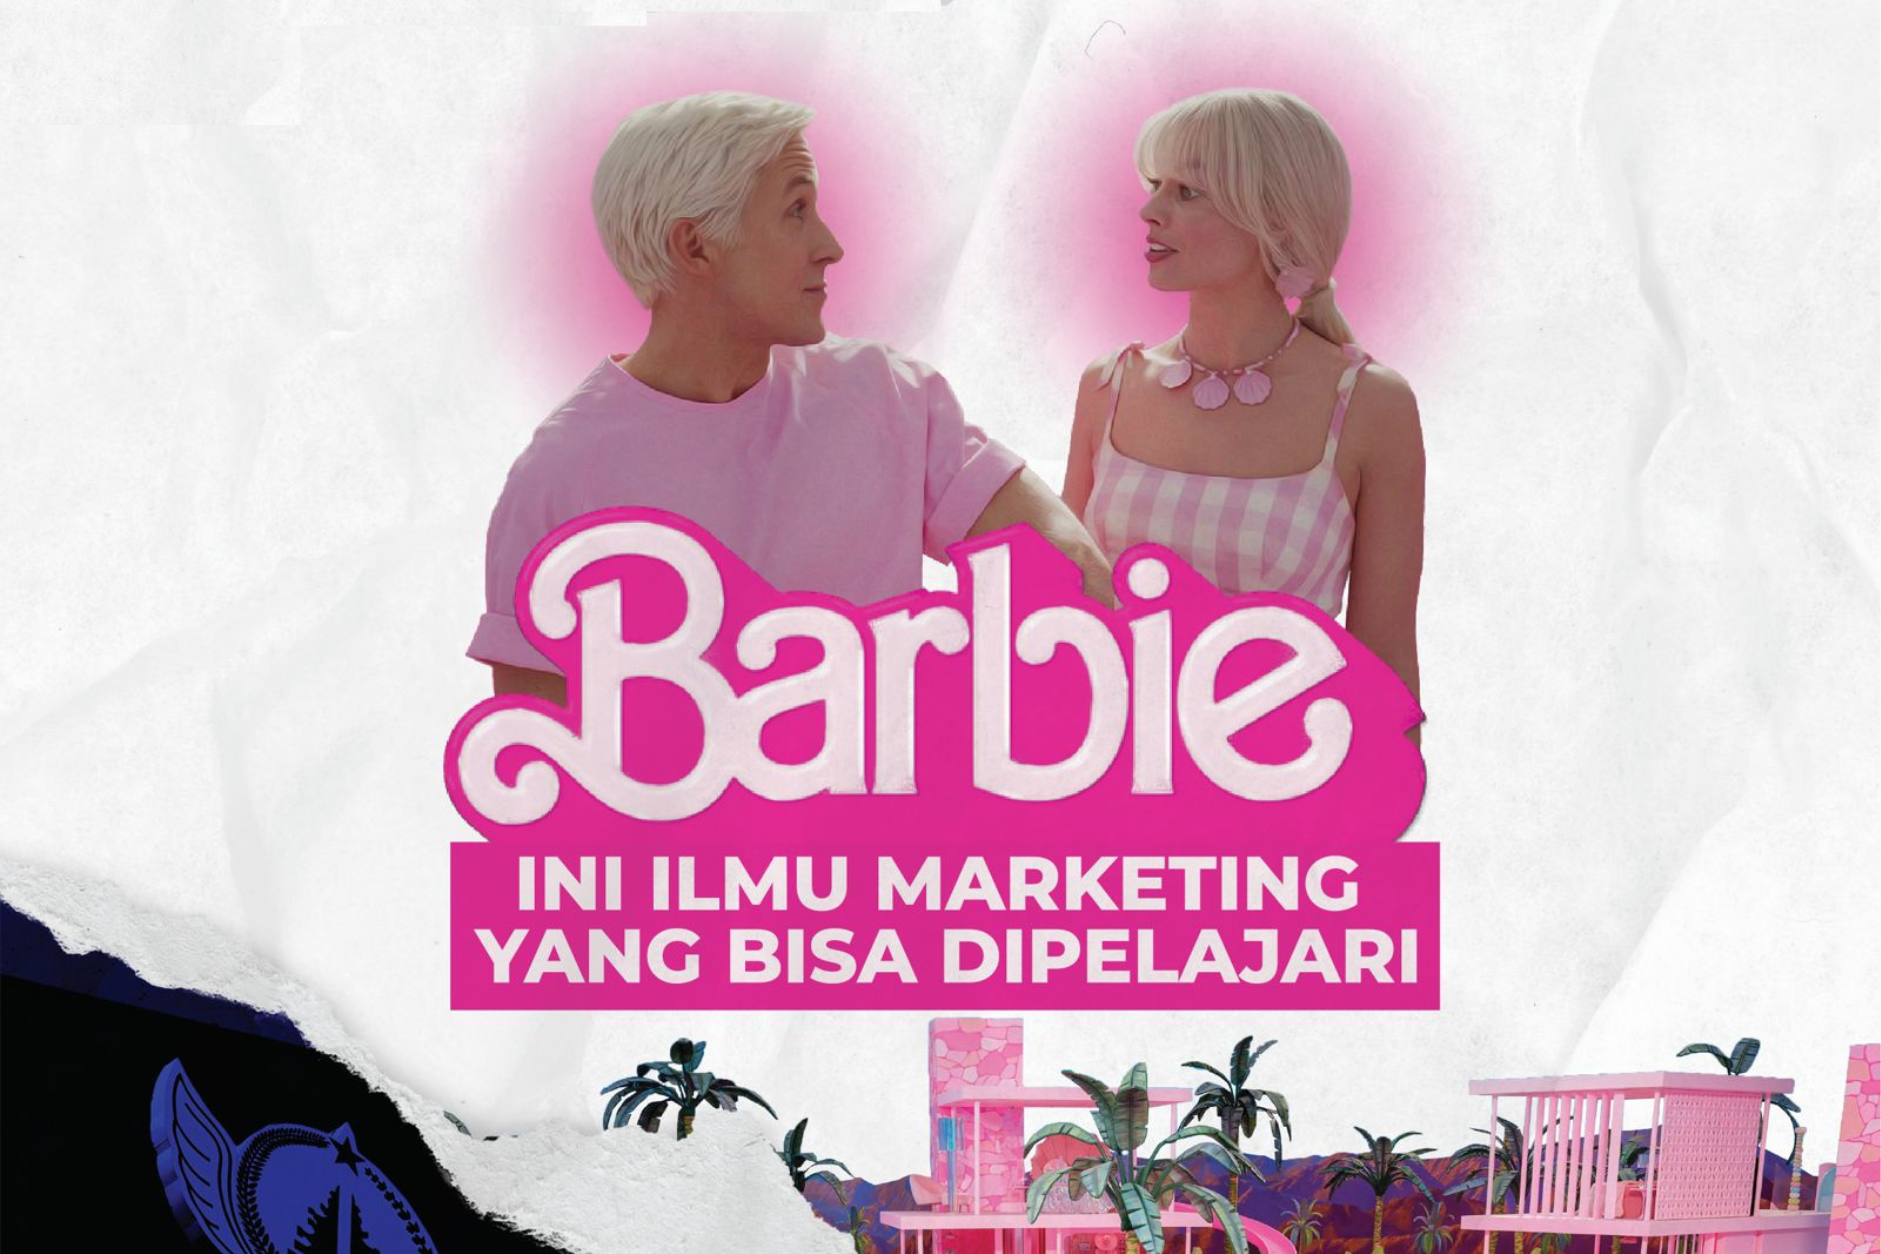 Mengenal Barbie dan Strategi Marketing Brand Mereka yang Luar Biasa